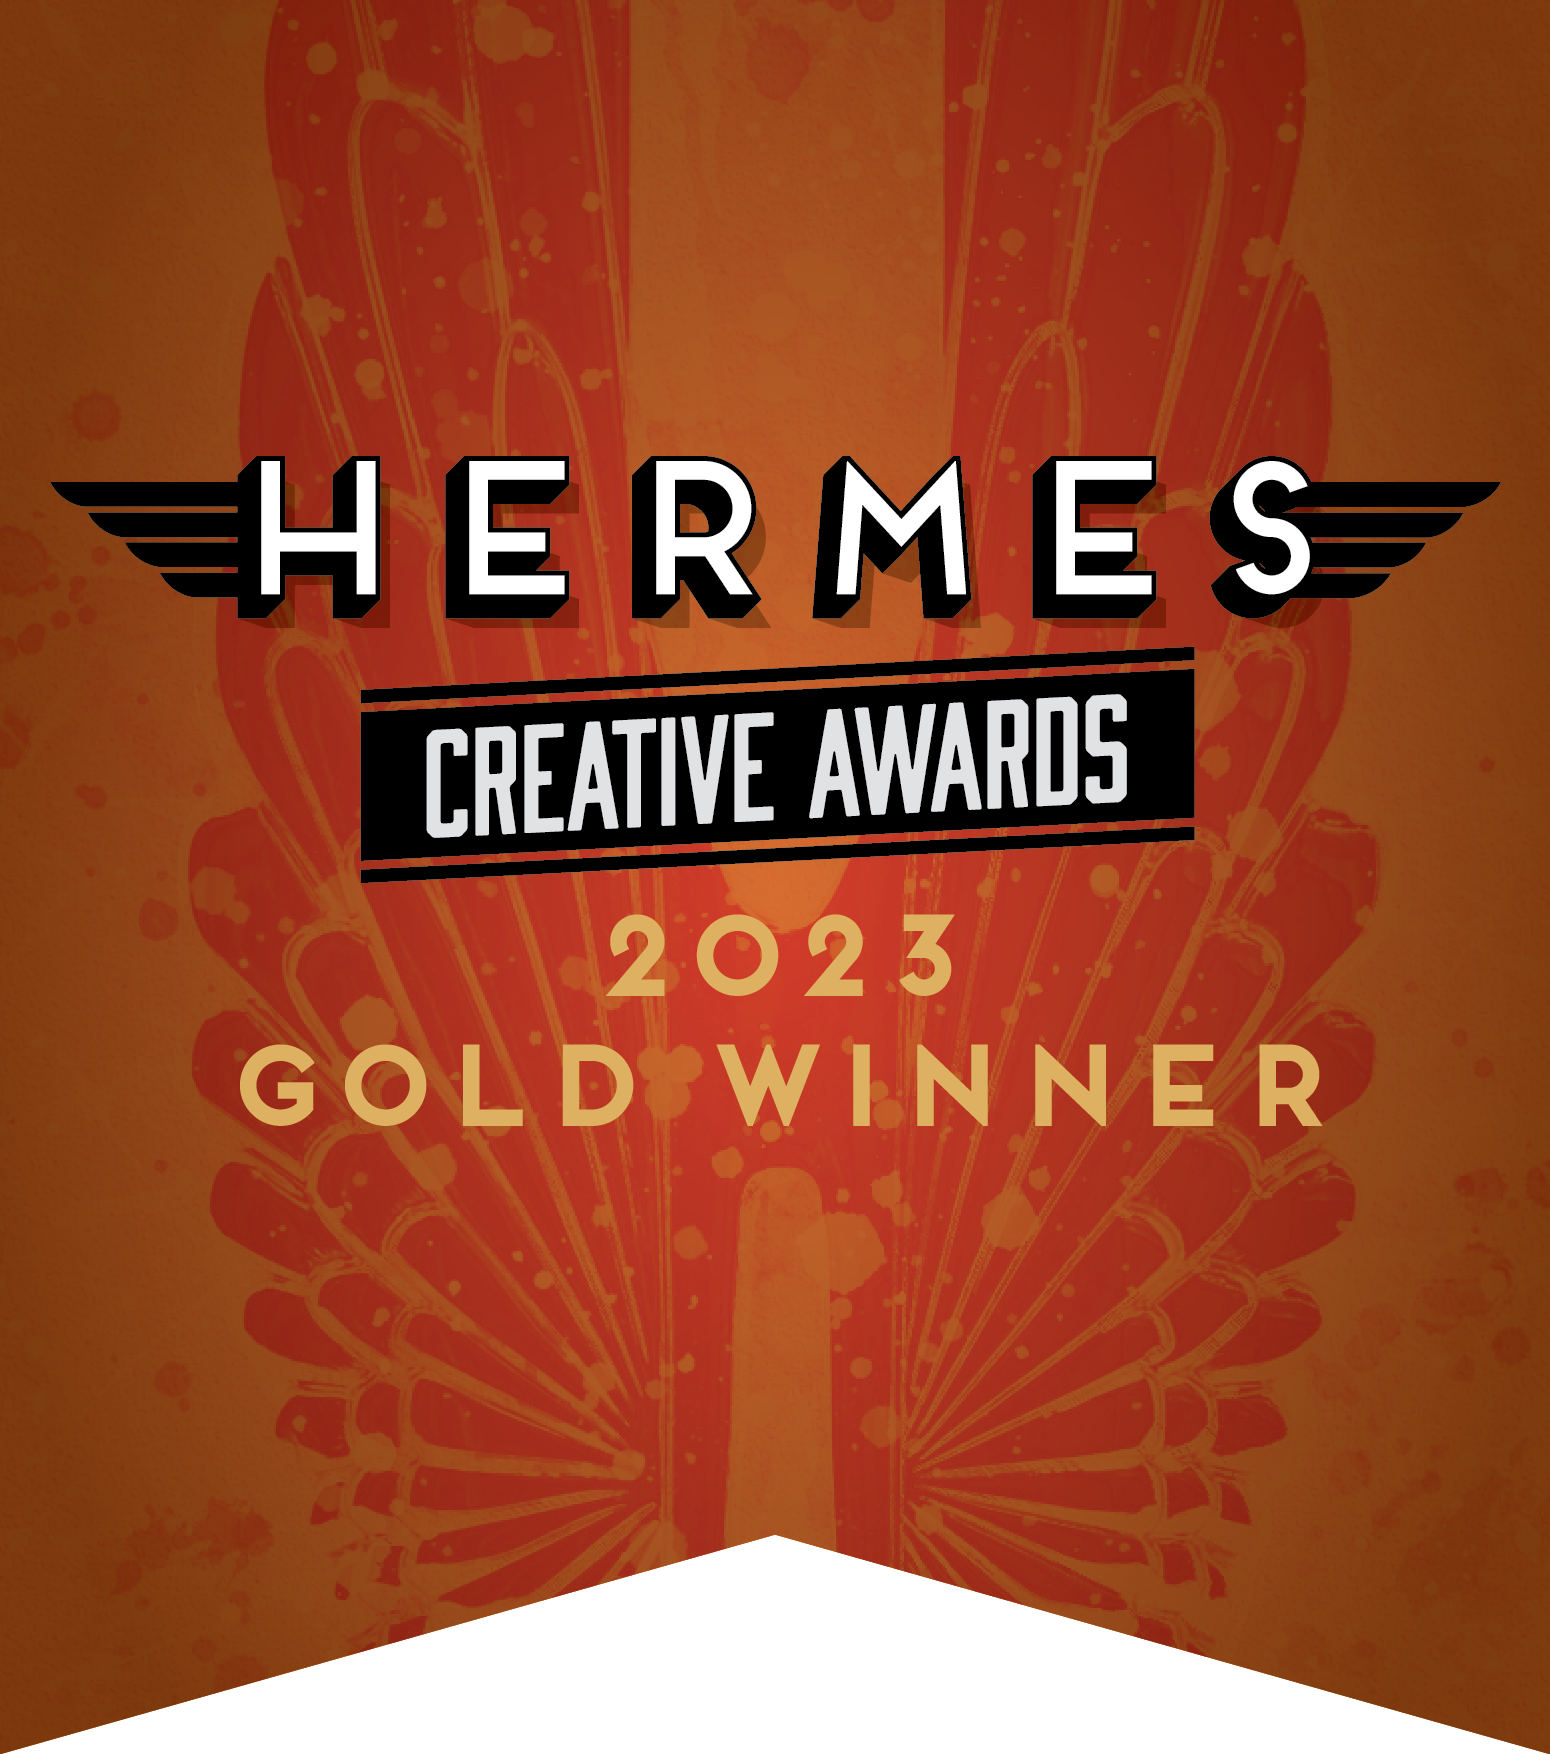 Hermes Creative Awards 2023 Gold Winner for the Glooko.com Corporate Website